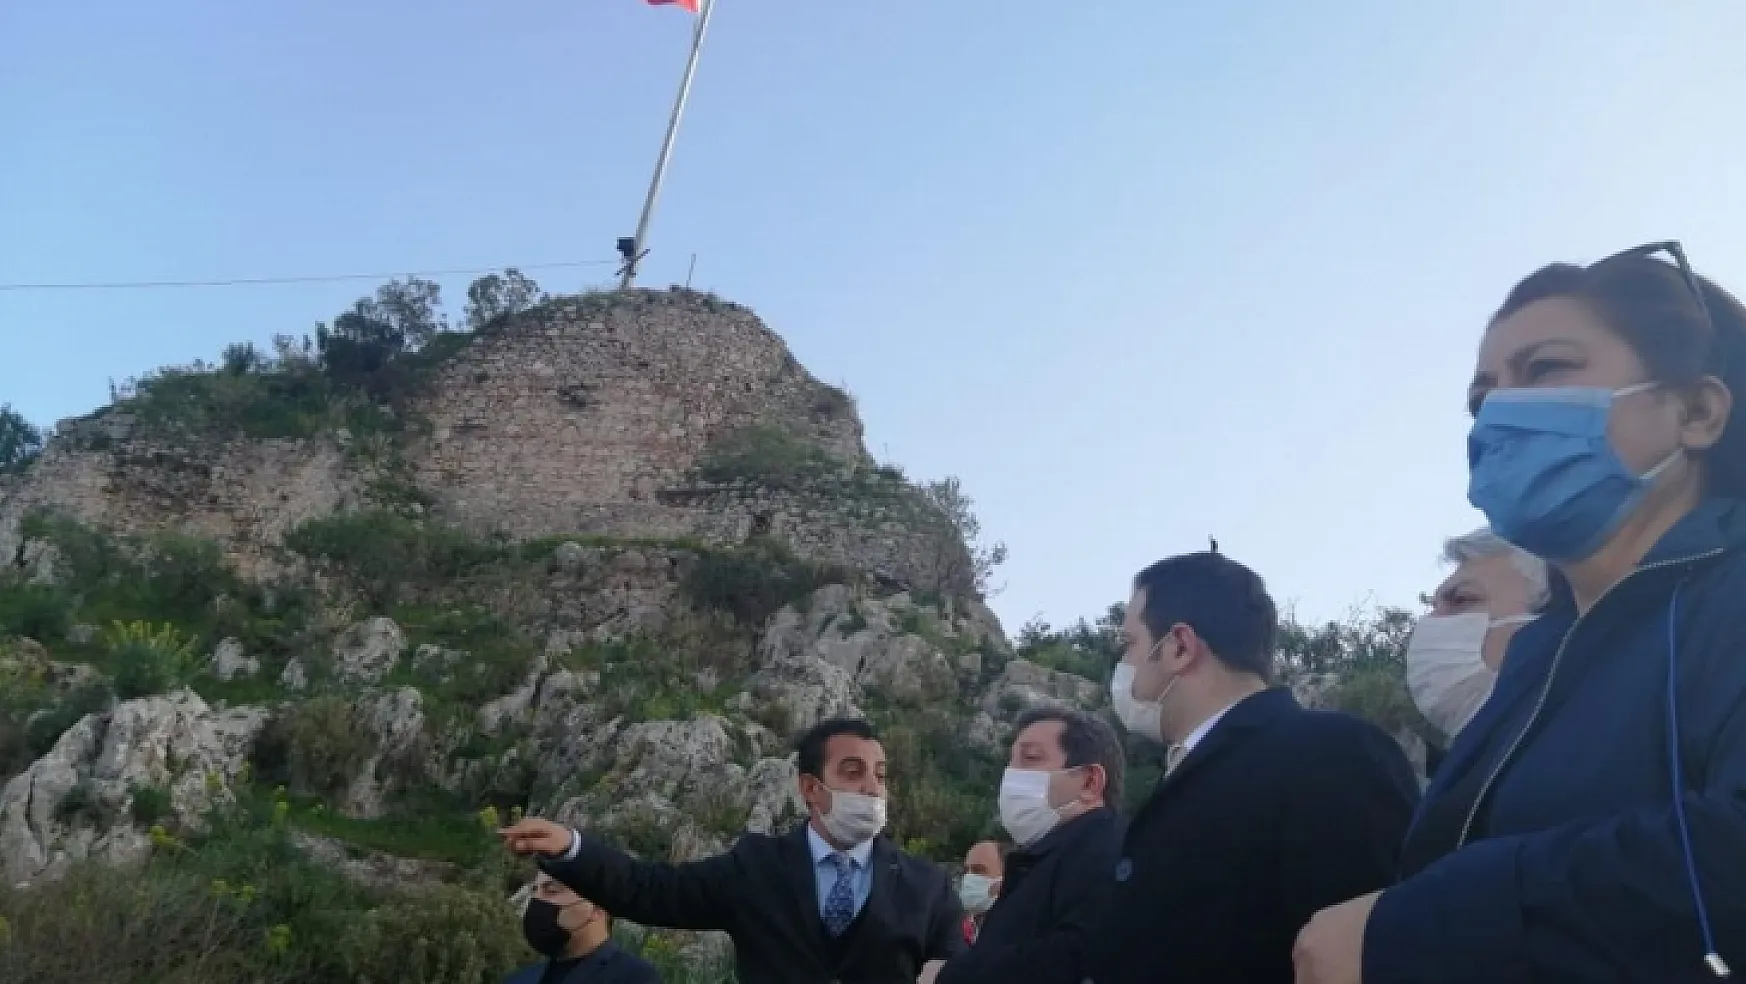 Muhtar Taşar, 'Aminthas'a arkeolojik park talebinde bulunduk'